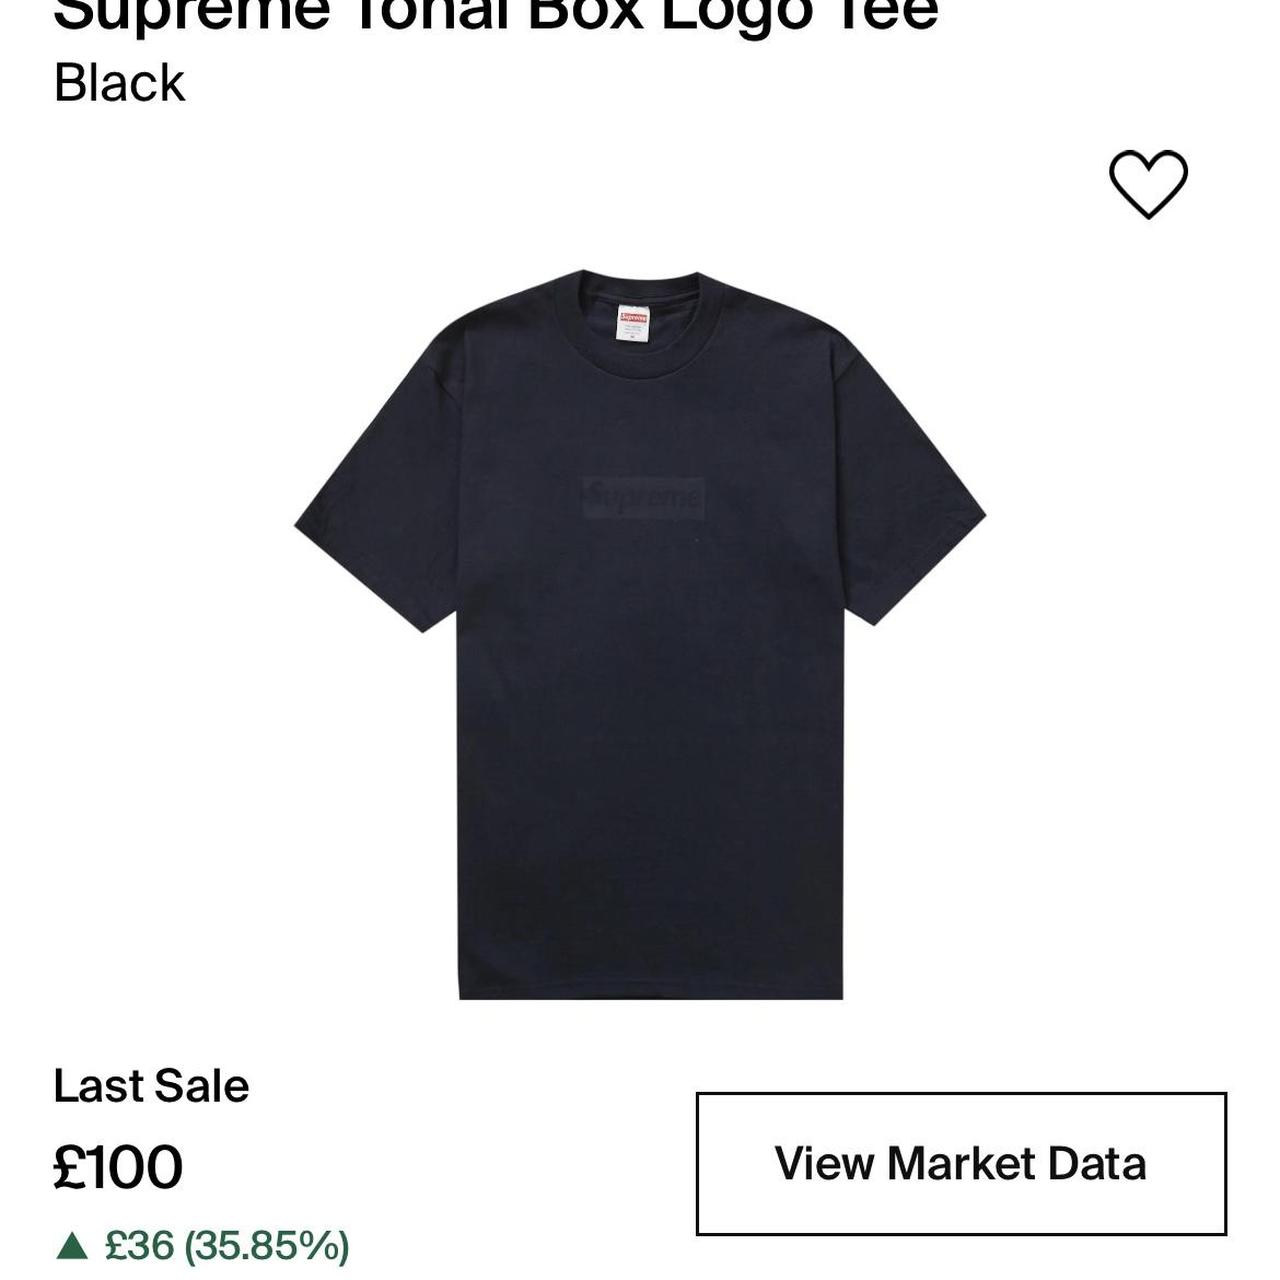 Supreme Tonal Box Logo Tee White XL